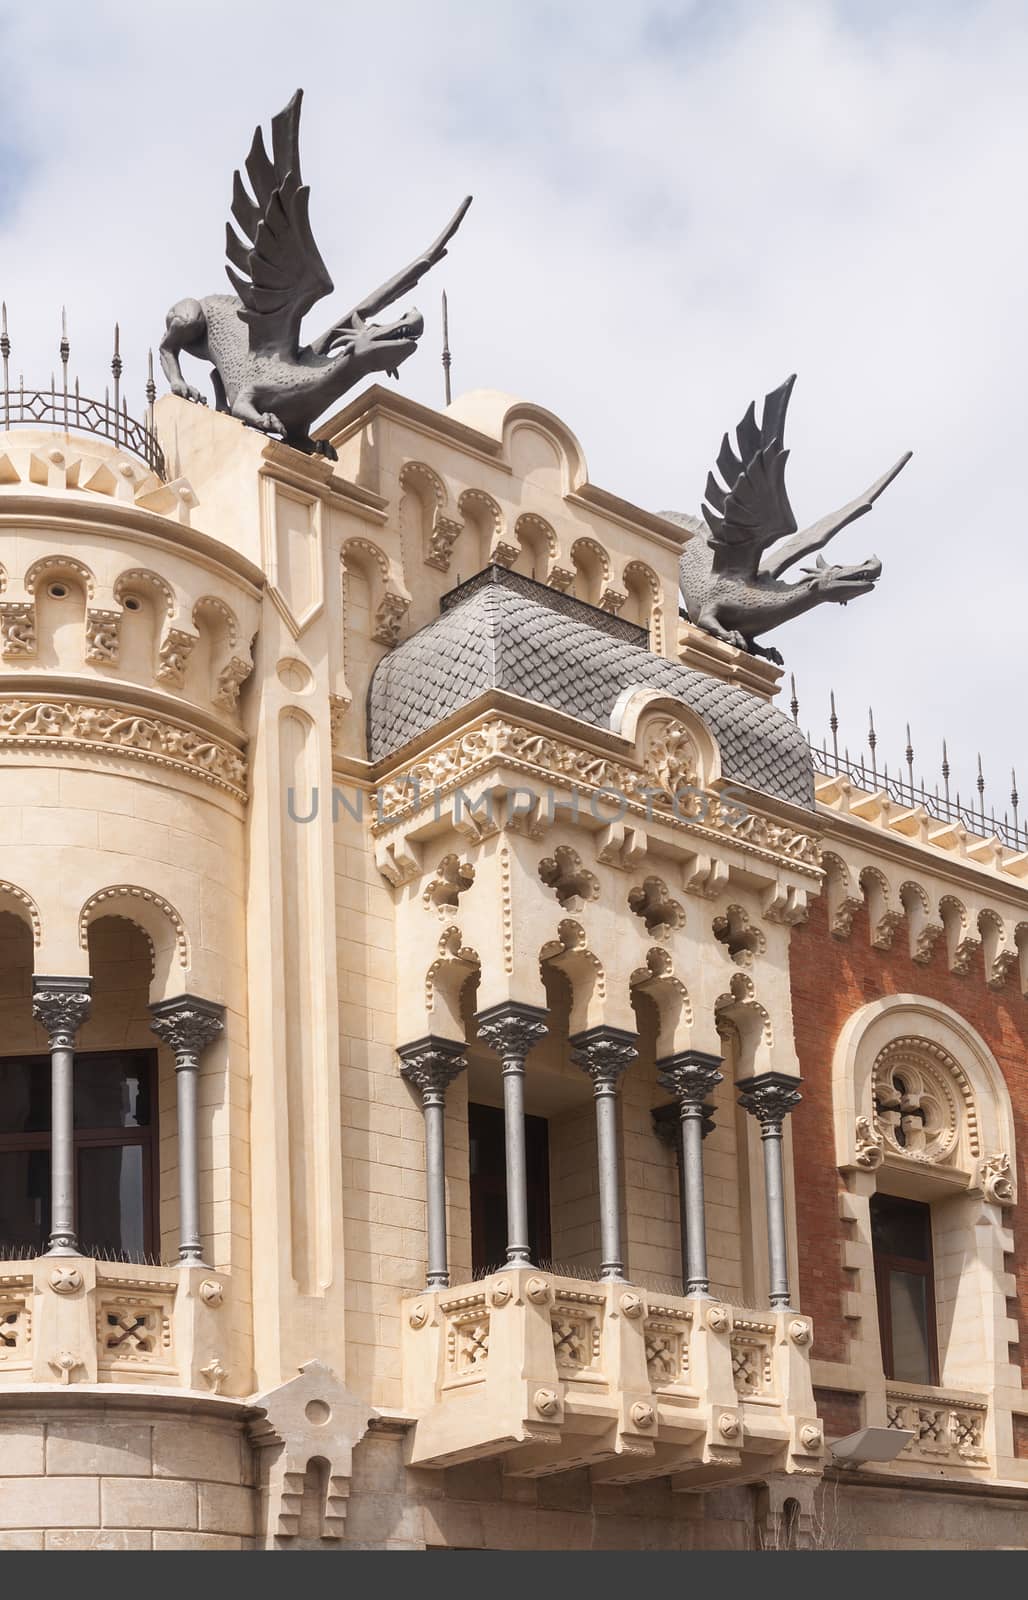 House with dragon sculptures, Ceuta, Spain